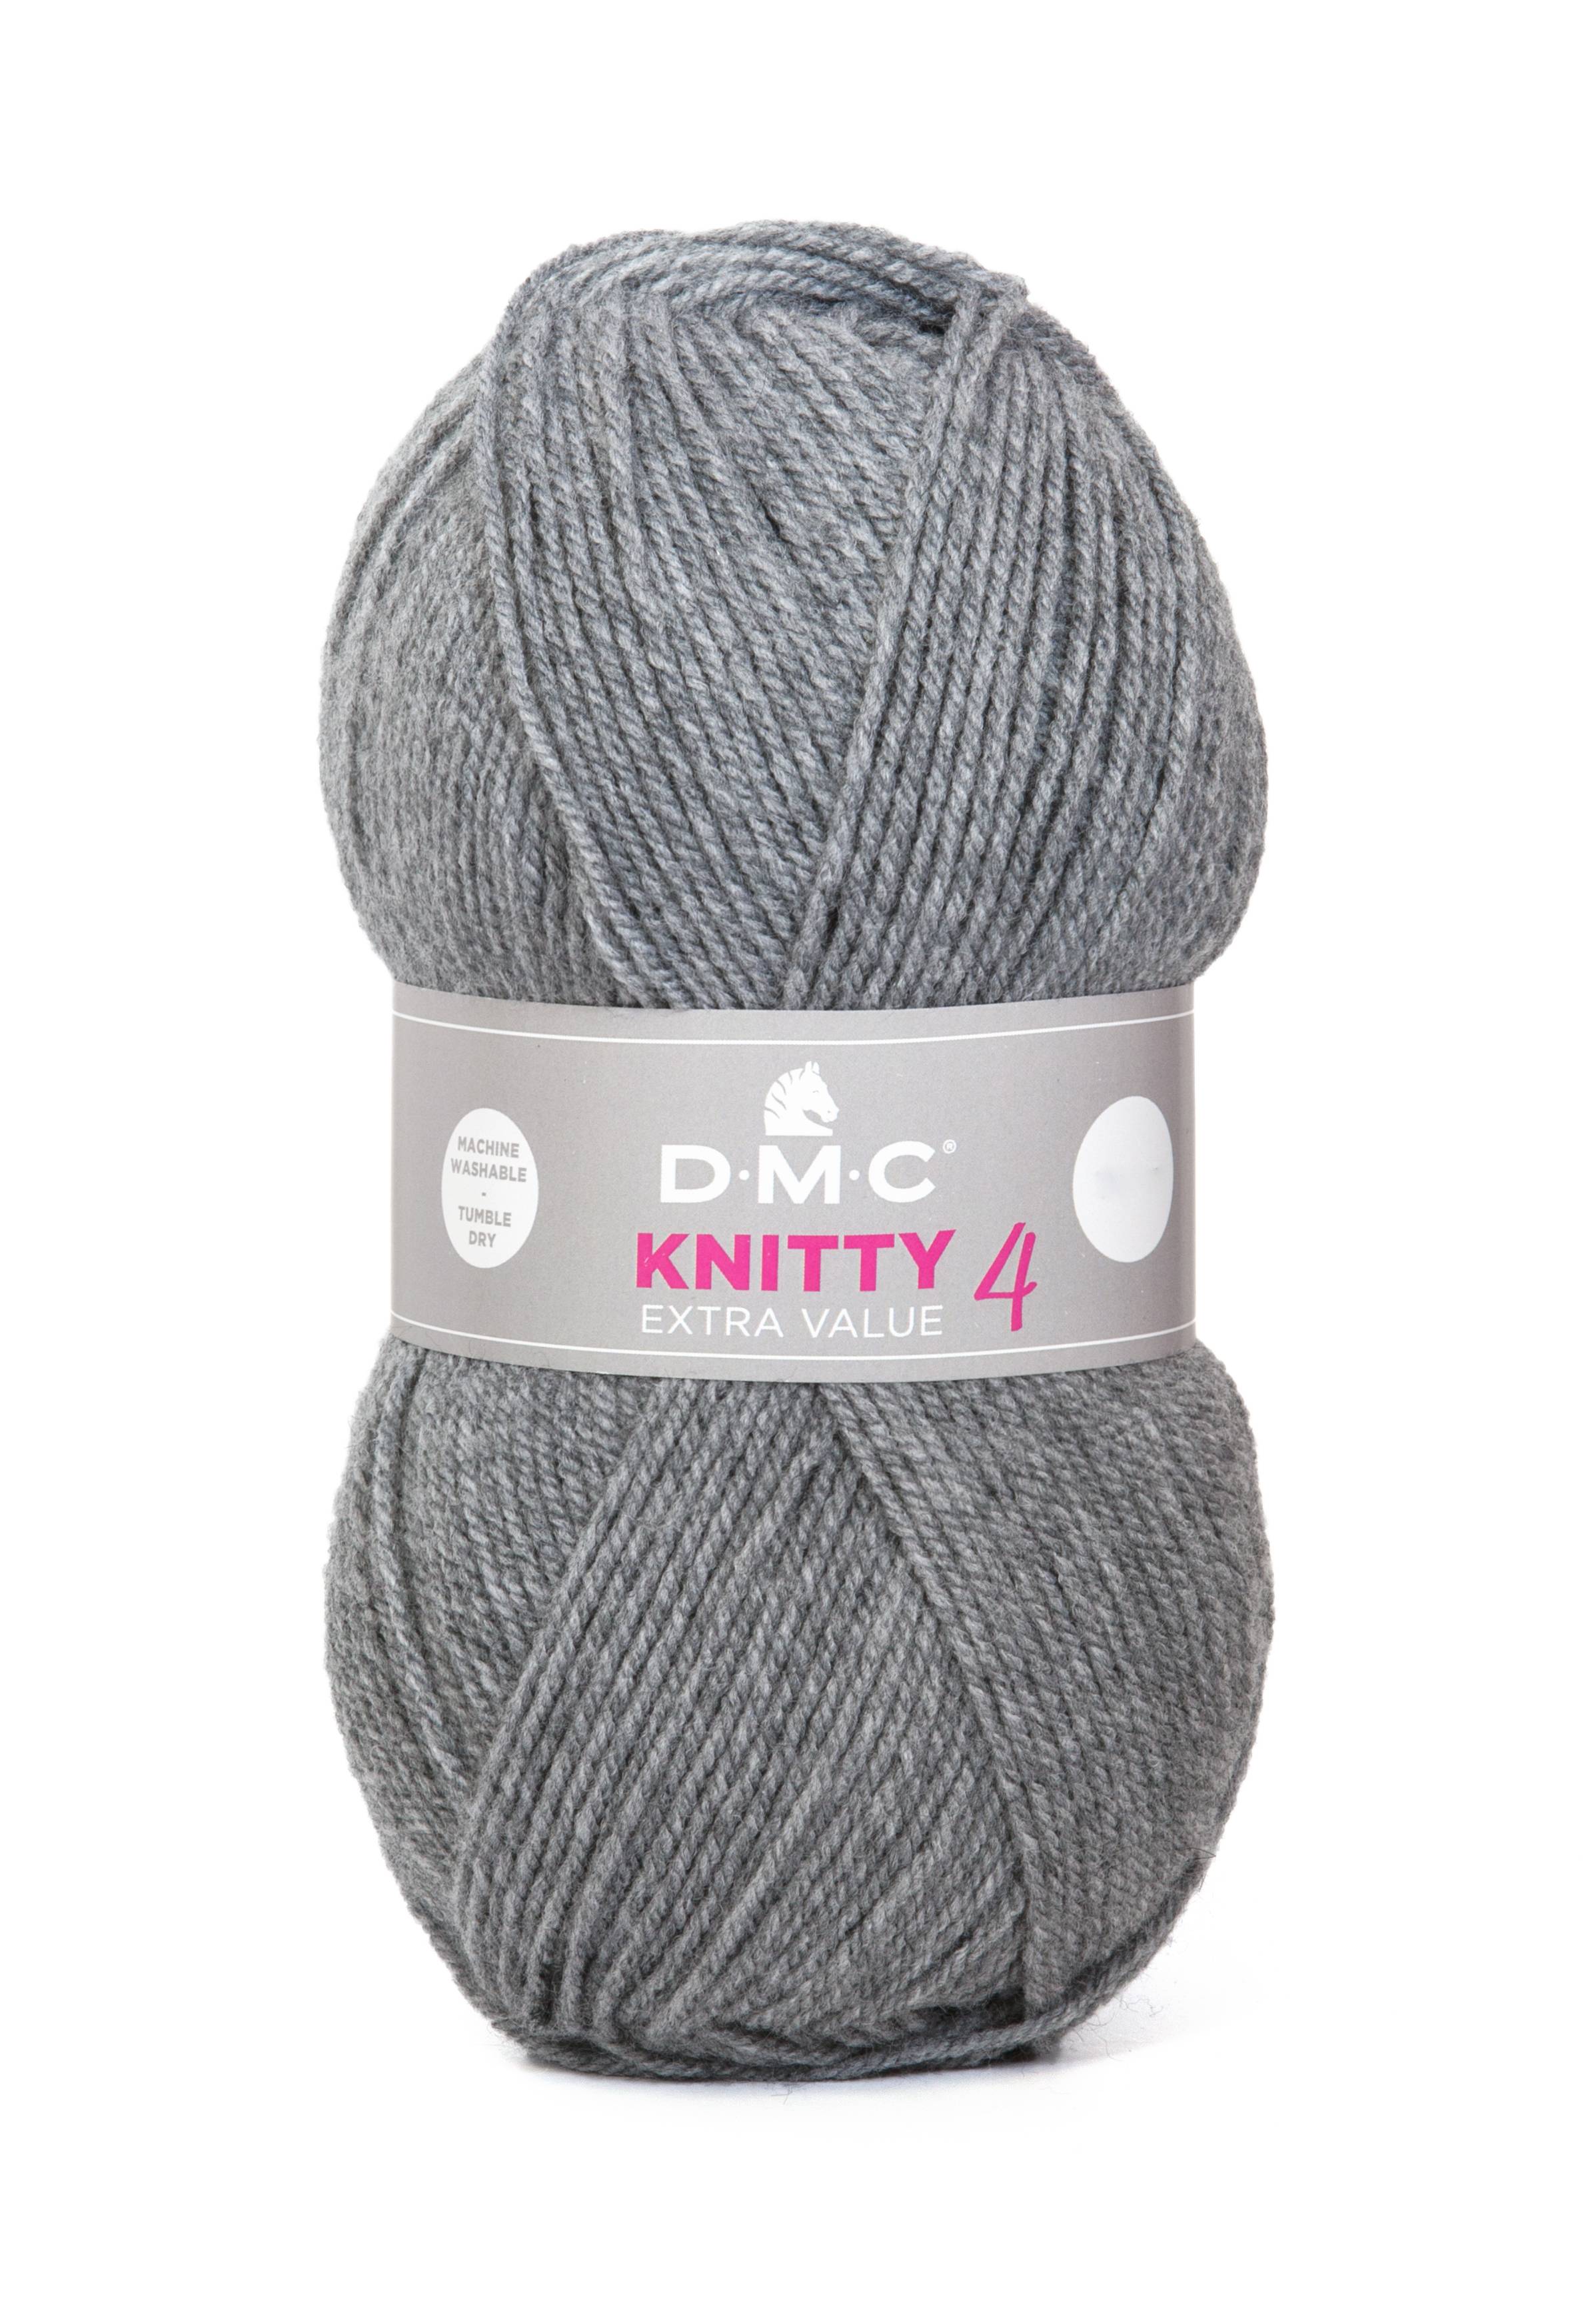 Lana Dmc Knitty 4 Colore 838